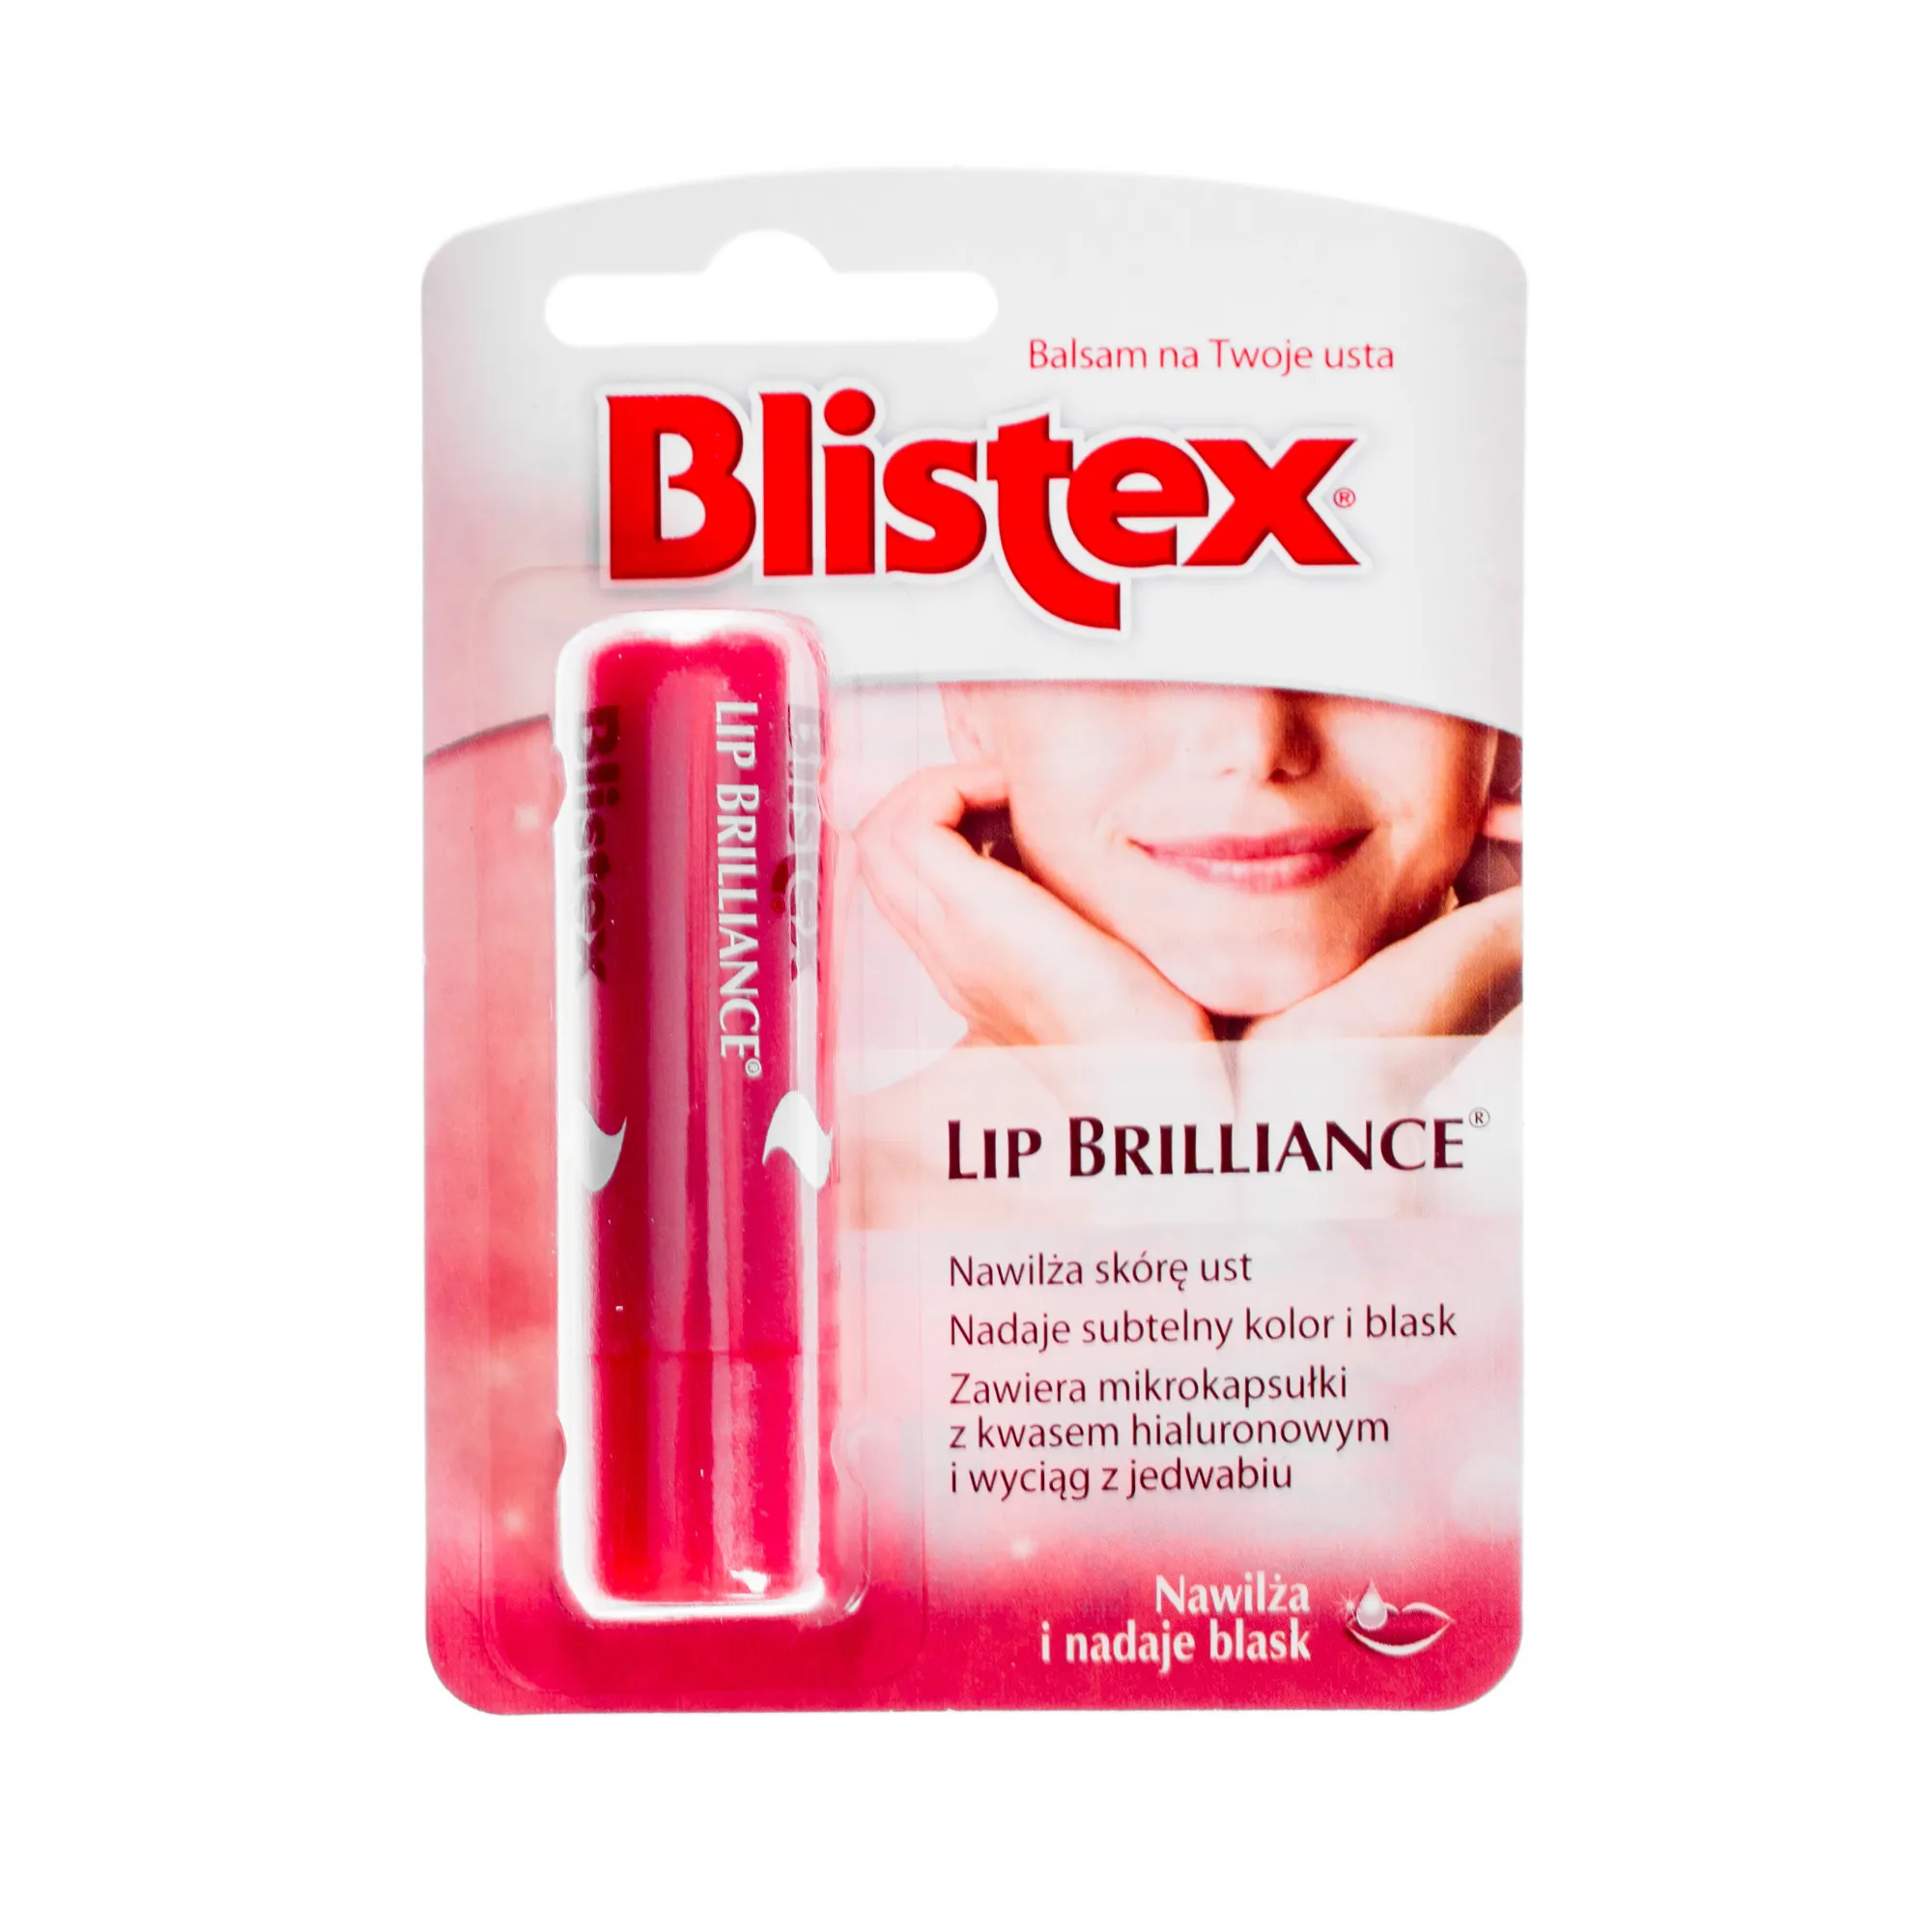 Blistex Brilliance, balsam na twoje usta nawilża i nadaje blask, 3,7 g